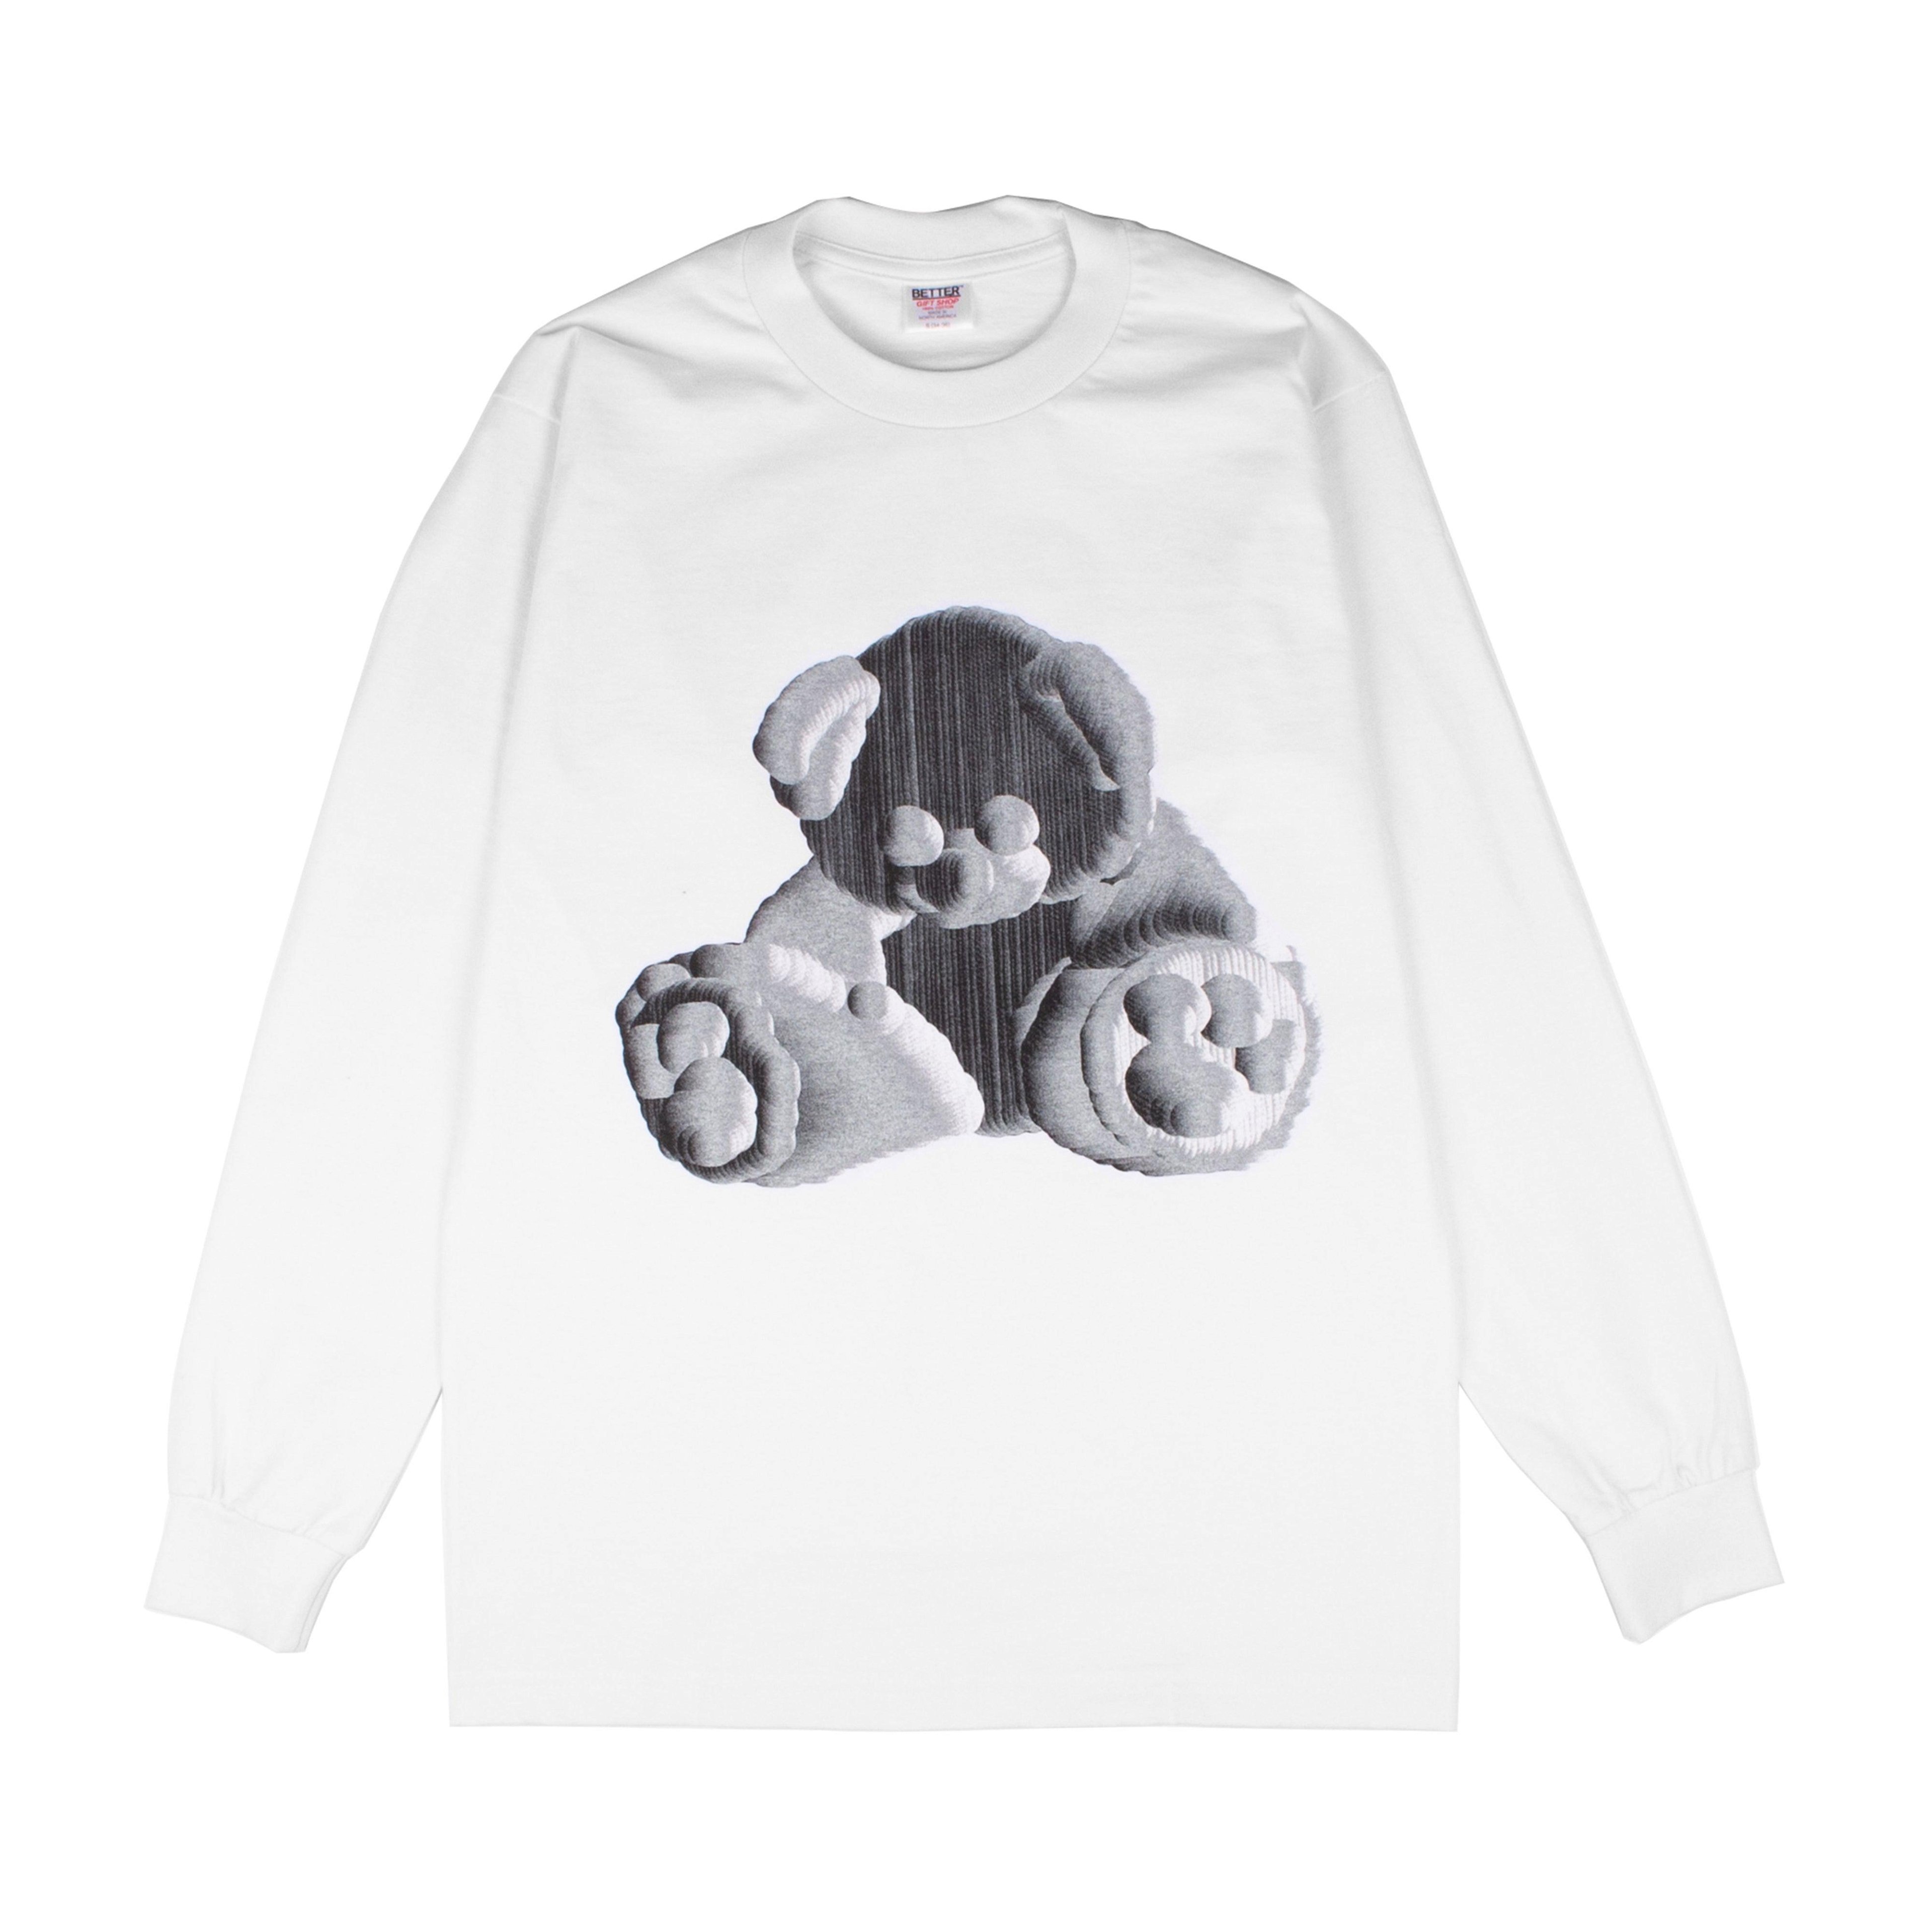 Better™ Gift Shop Digi Bear L/S T-Shirt (White) by BETTER GIFT SHOP